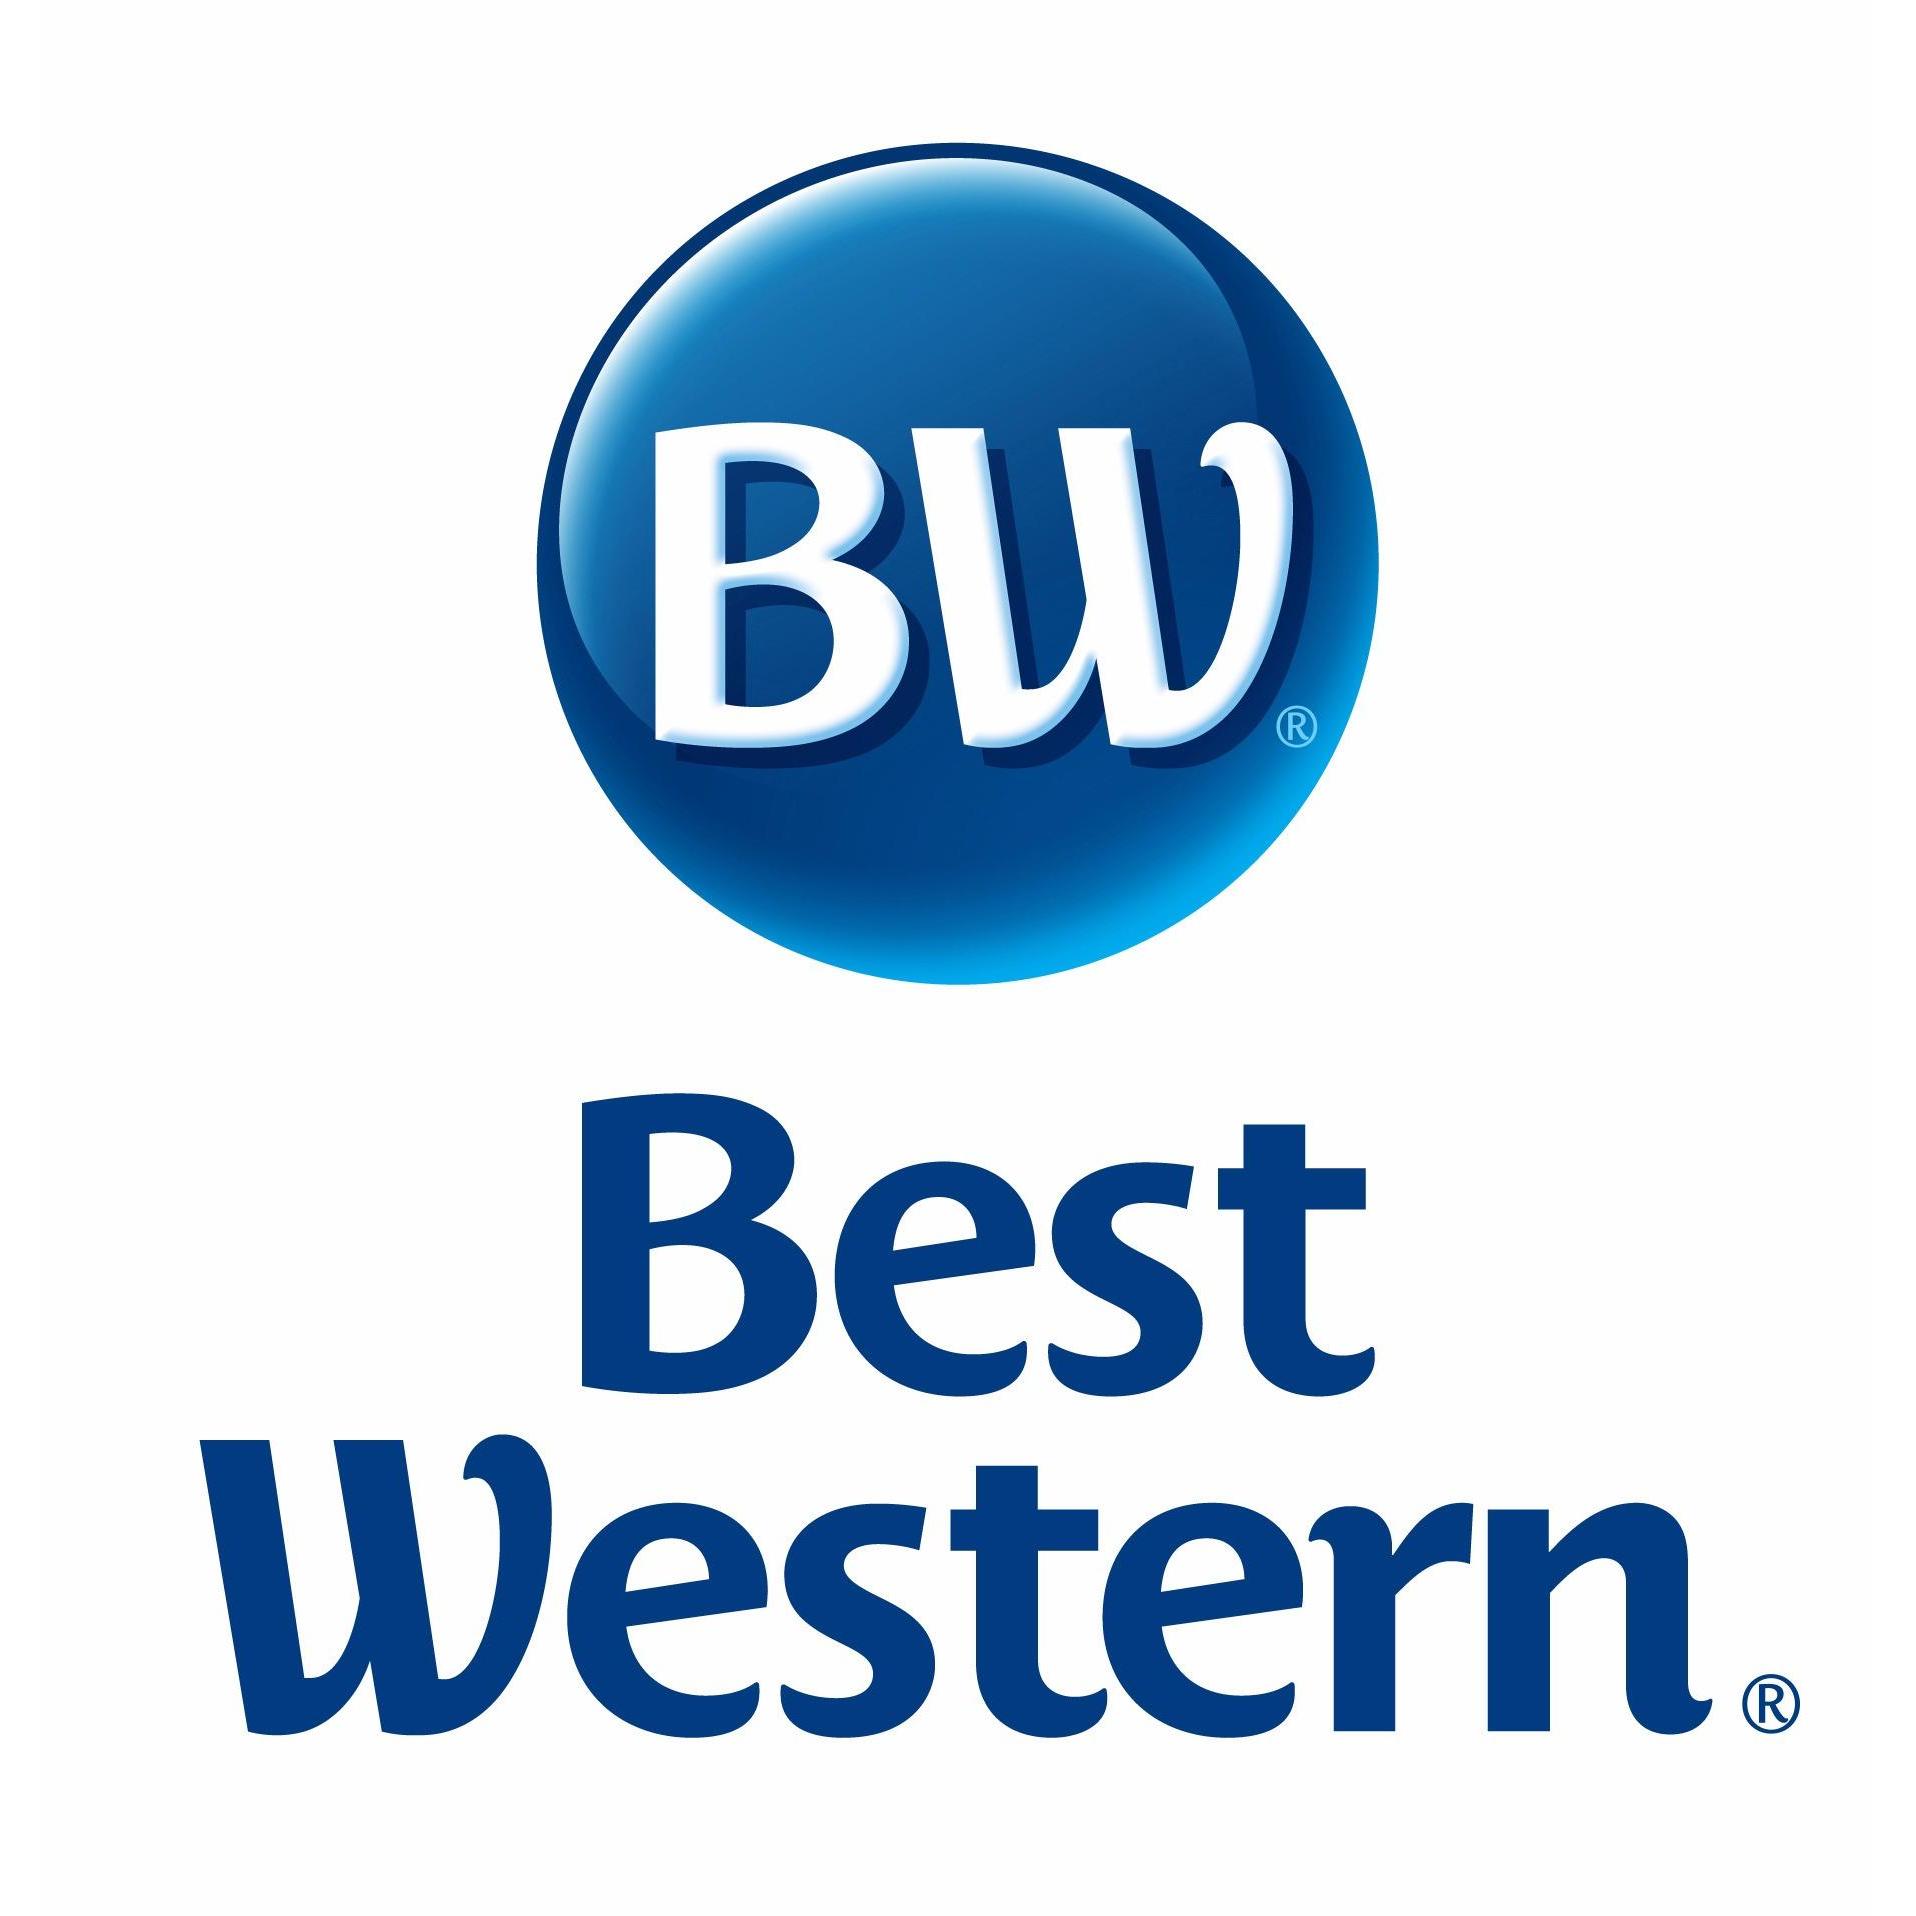 Logo Best Western Hotel Hohenzollern